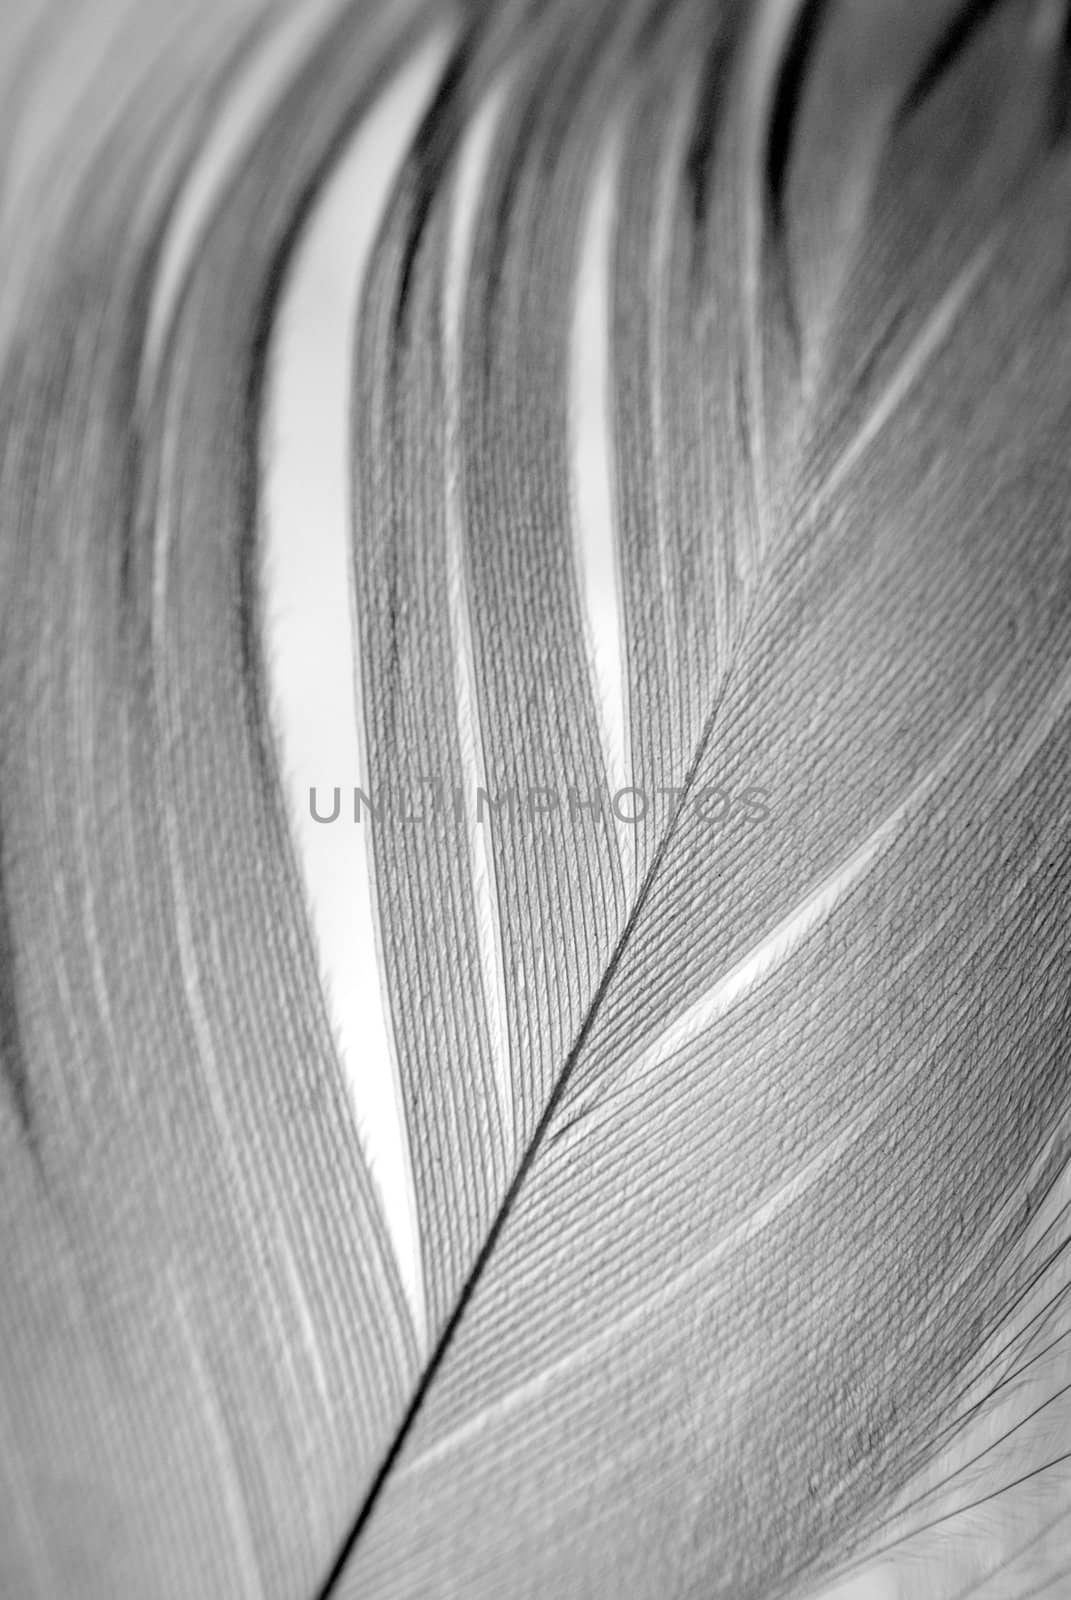 Bird's feather detail. Black and white. Shallow DOF.